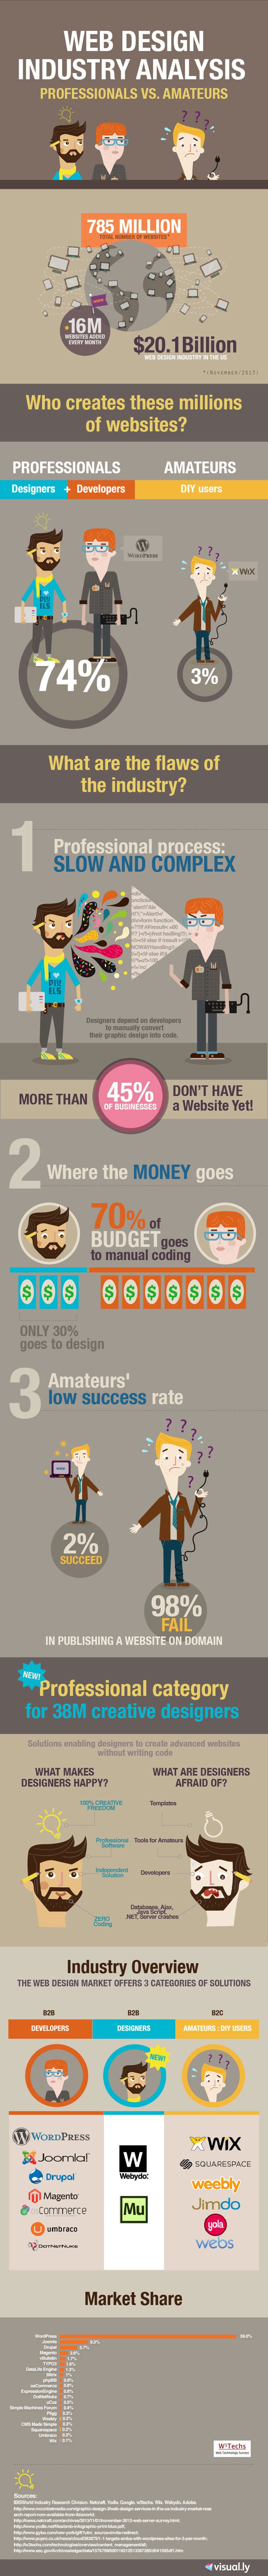 Infographic: Professional web designers vs. amateur users